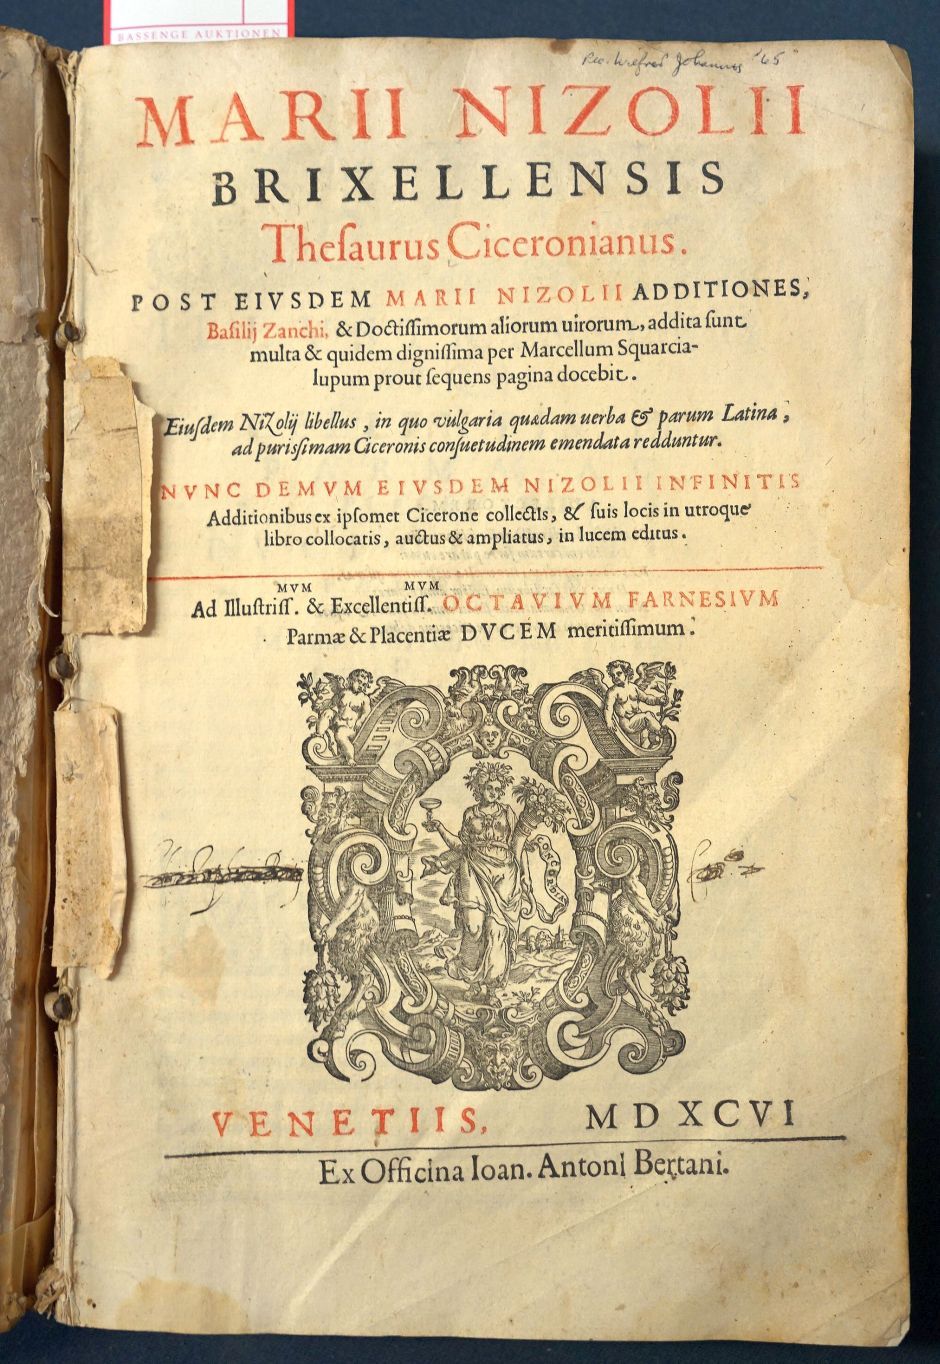 Lot 1160, Auction  115, Nizzoli, Mario, Thesaurus Ciceronianus